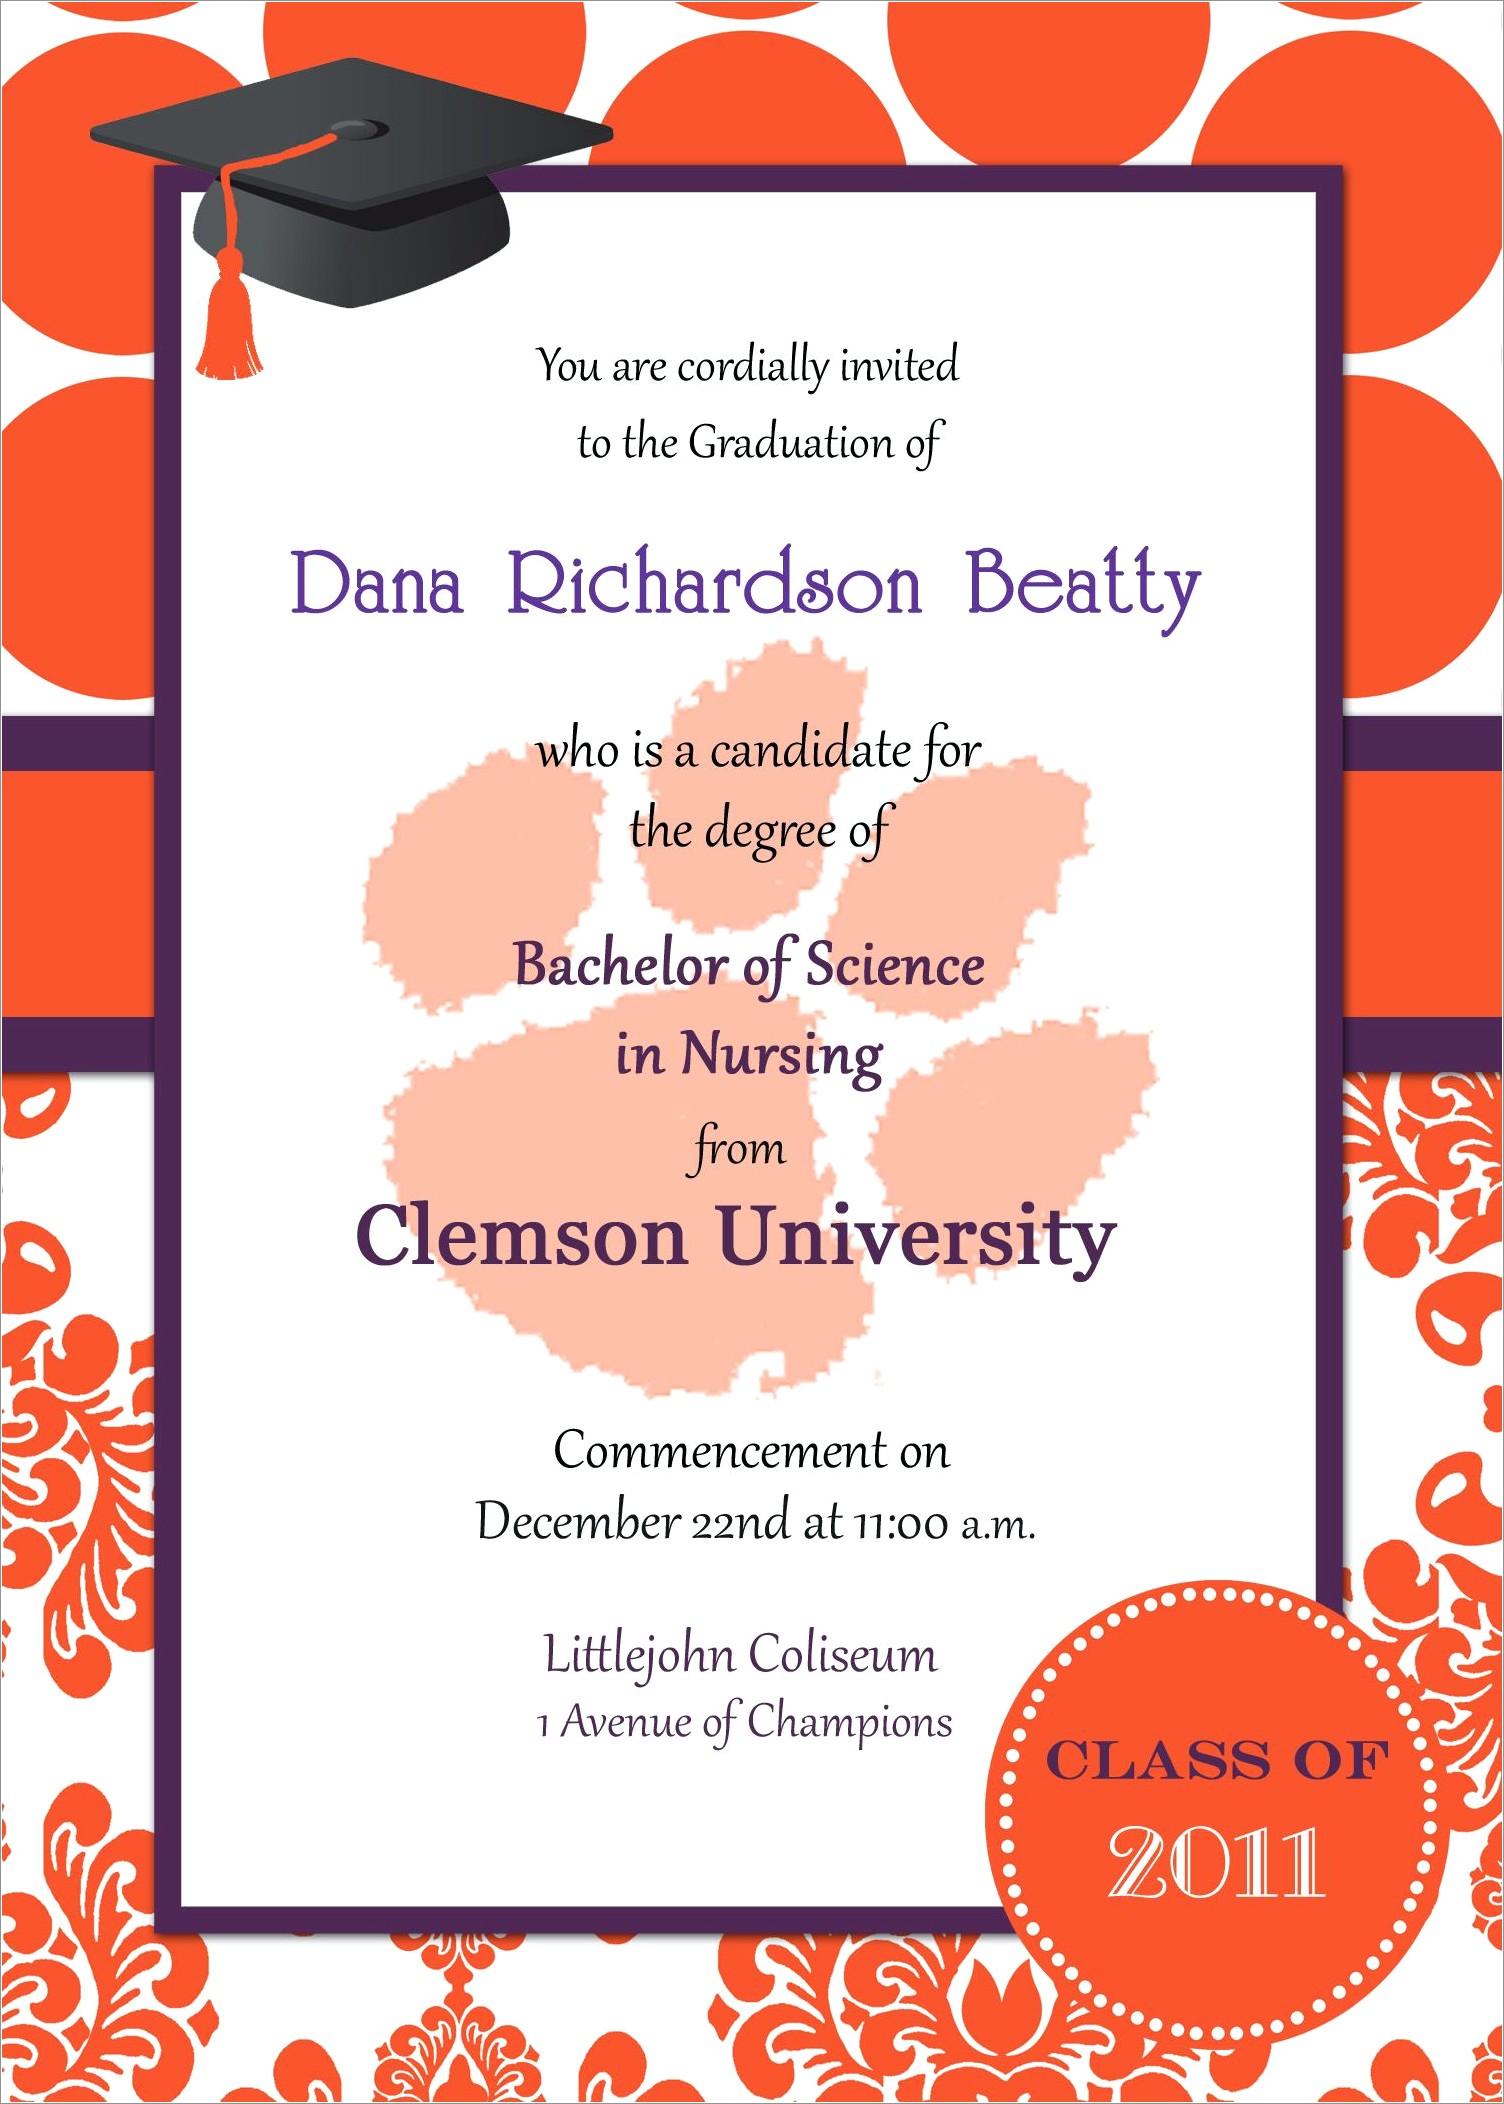 Clemson University Graduation Invitations